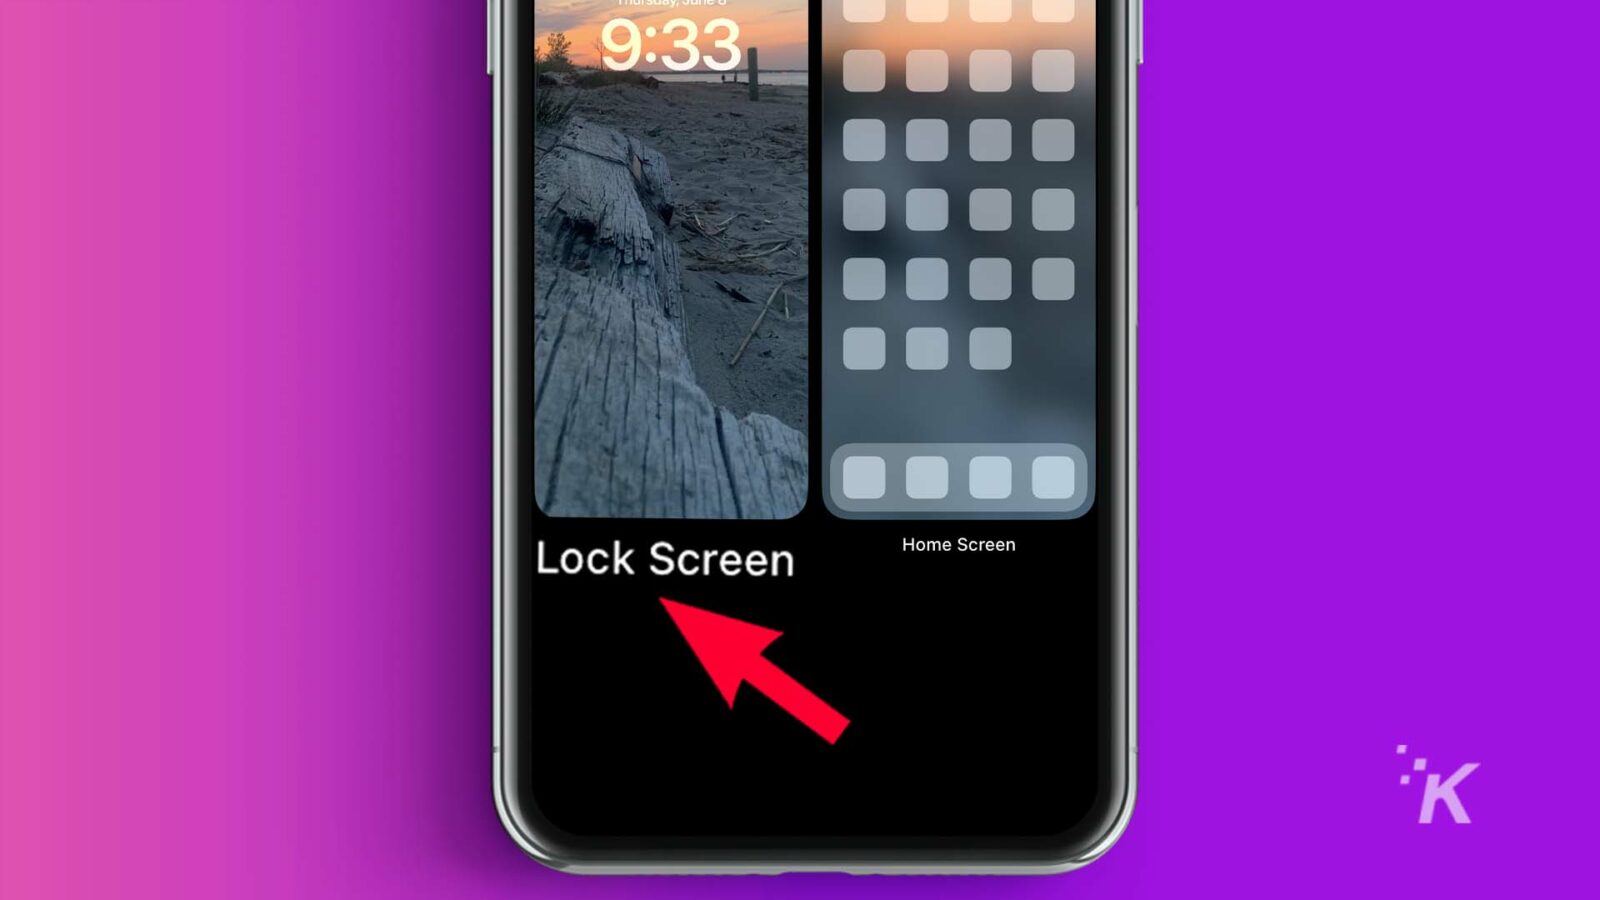 Lock Screen - iPhone in purple background in Photo Shuffle